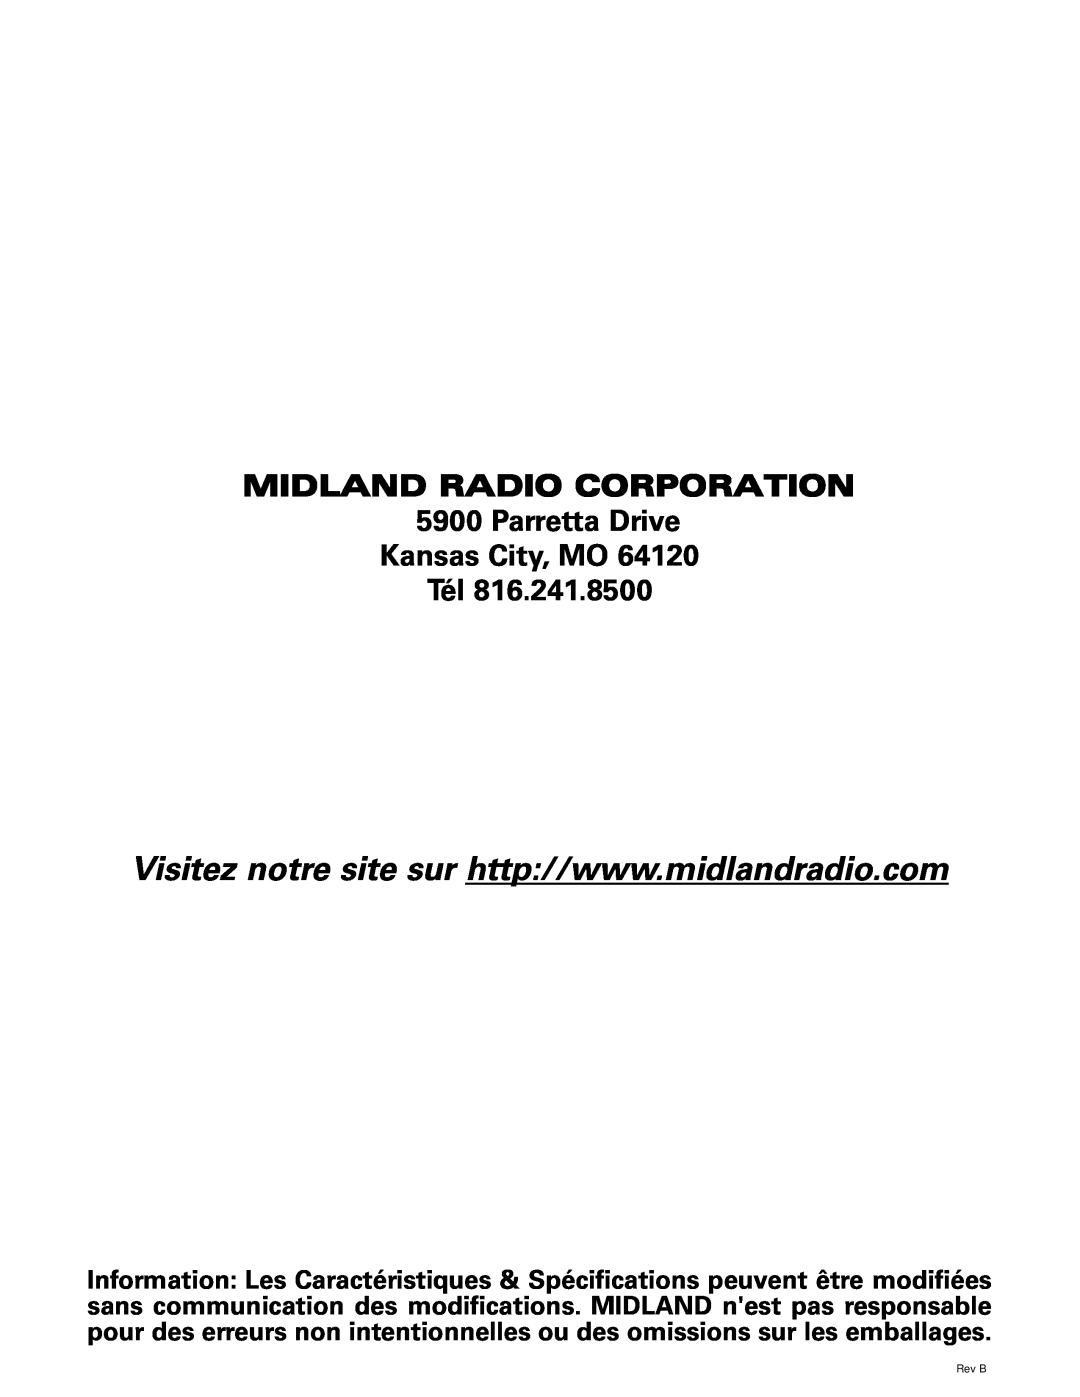 Midland Radio NT1VP, NT1 SERIES owner manual MIDLAND RADIO CORPORATION 5900 Parretta Drive Kansas City, MO Tél, Rev B 